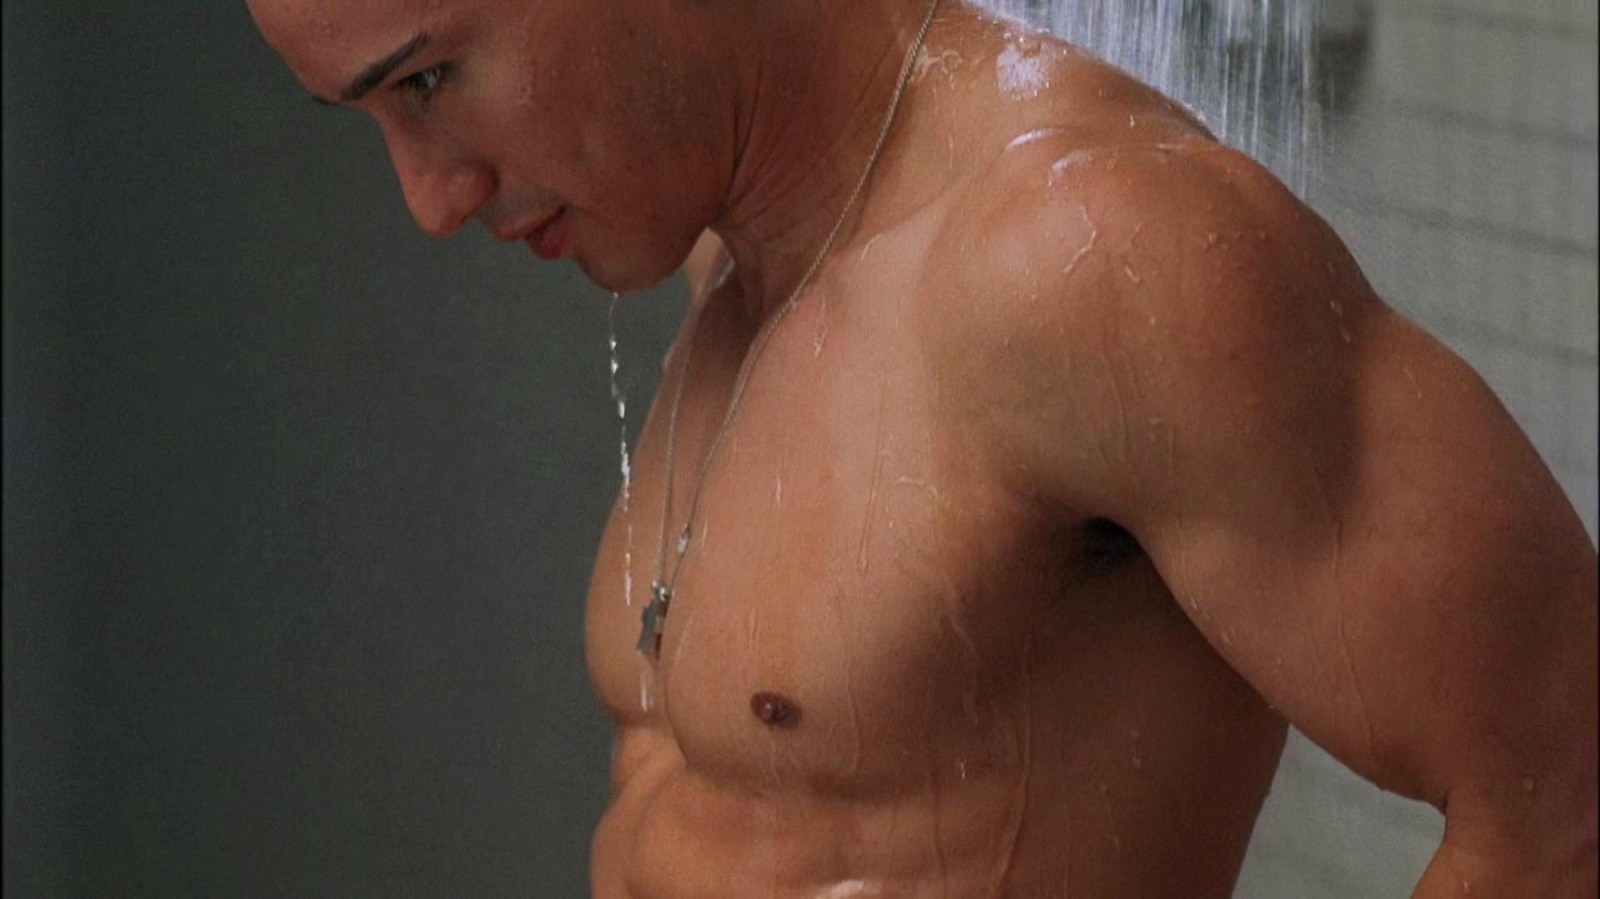 Hot guy jerks off the shower gorgeous fan photo